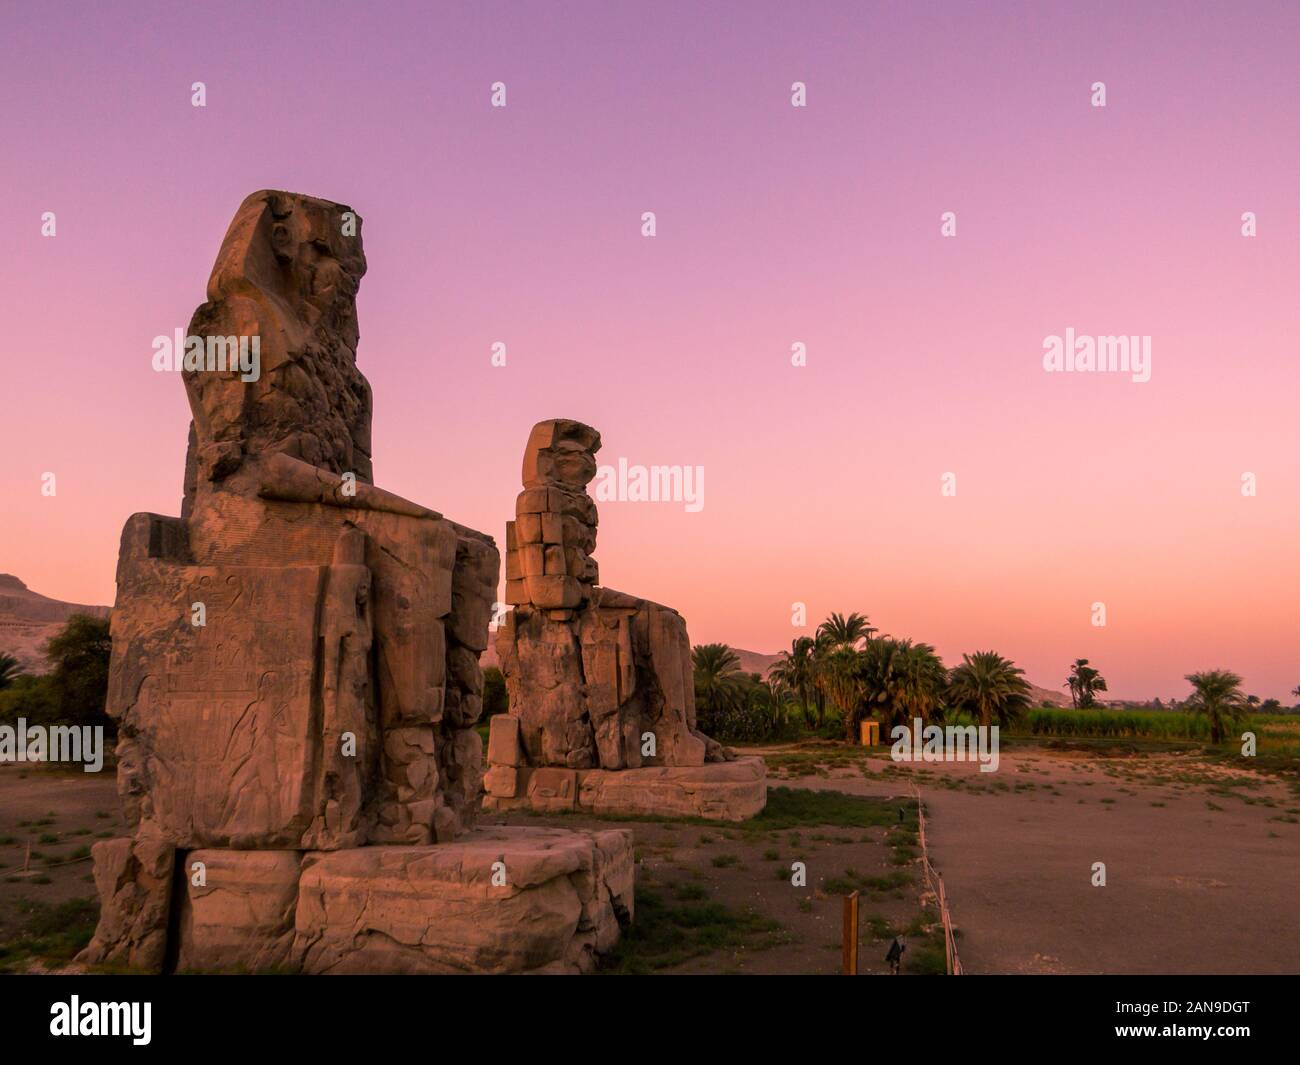 Colossi of Memnon, Mortuary Temple of Amenhotep III, Luxor, Egypt Stock Photo